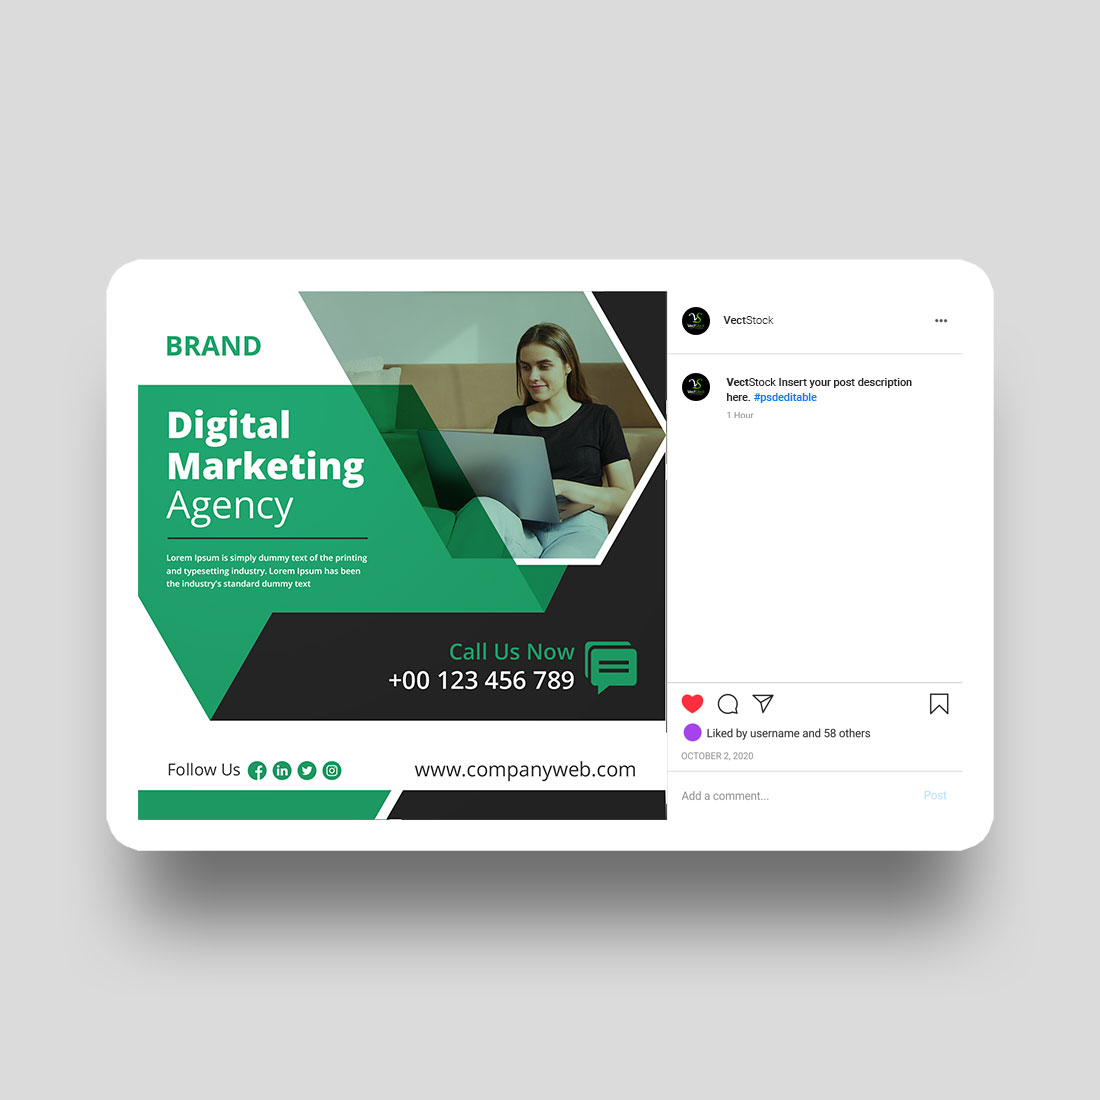 Digital marketing agency social media Instagram post and banner template design preview image.